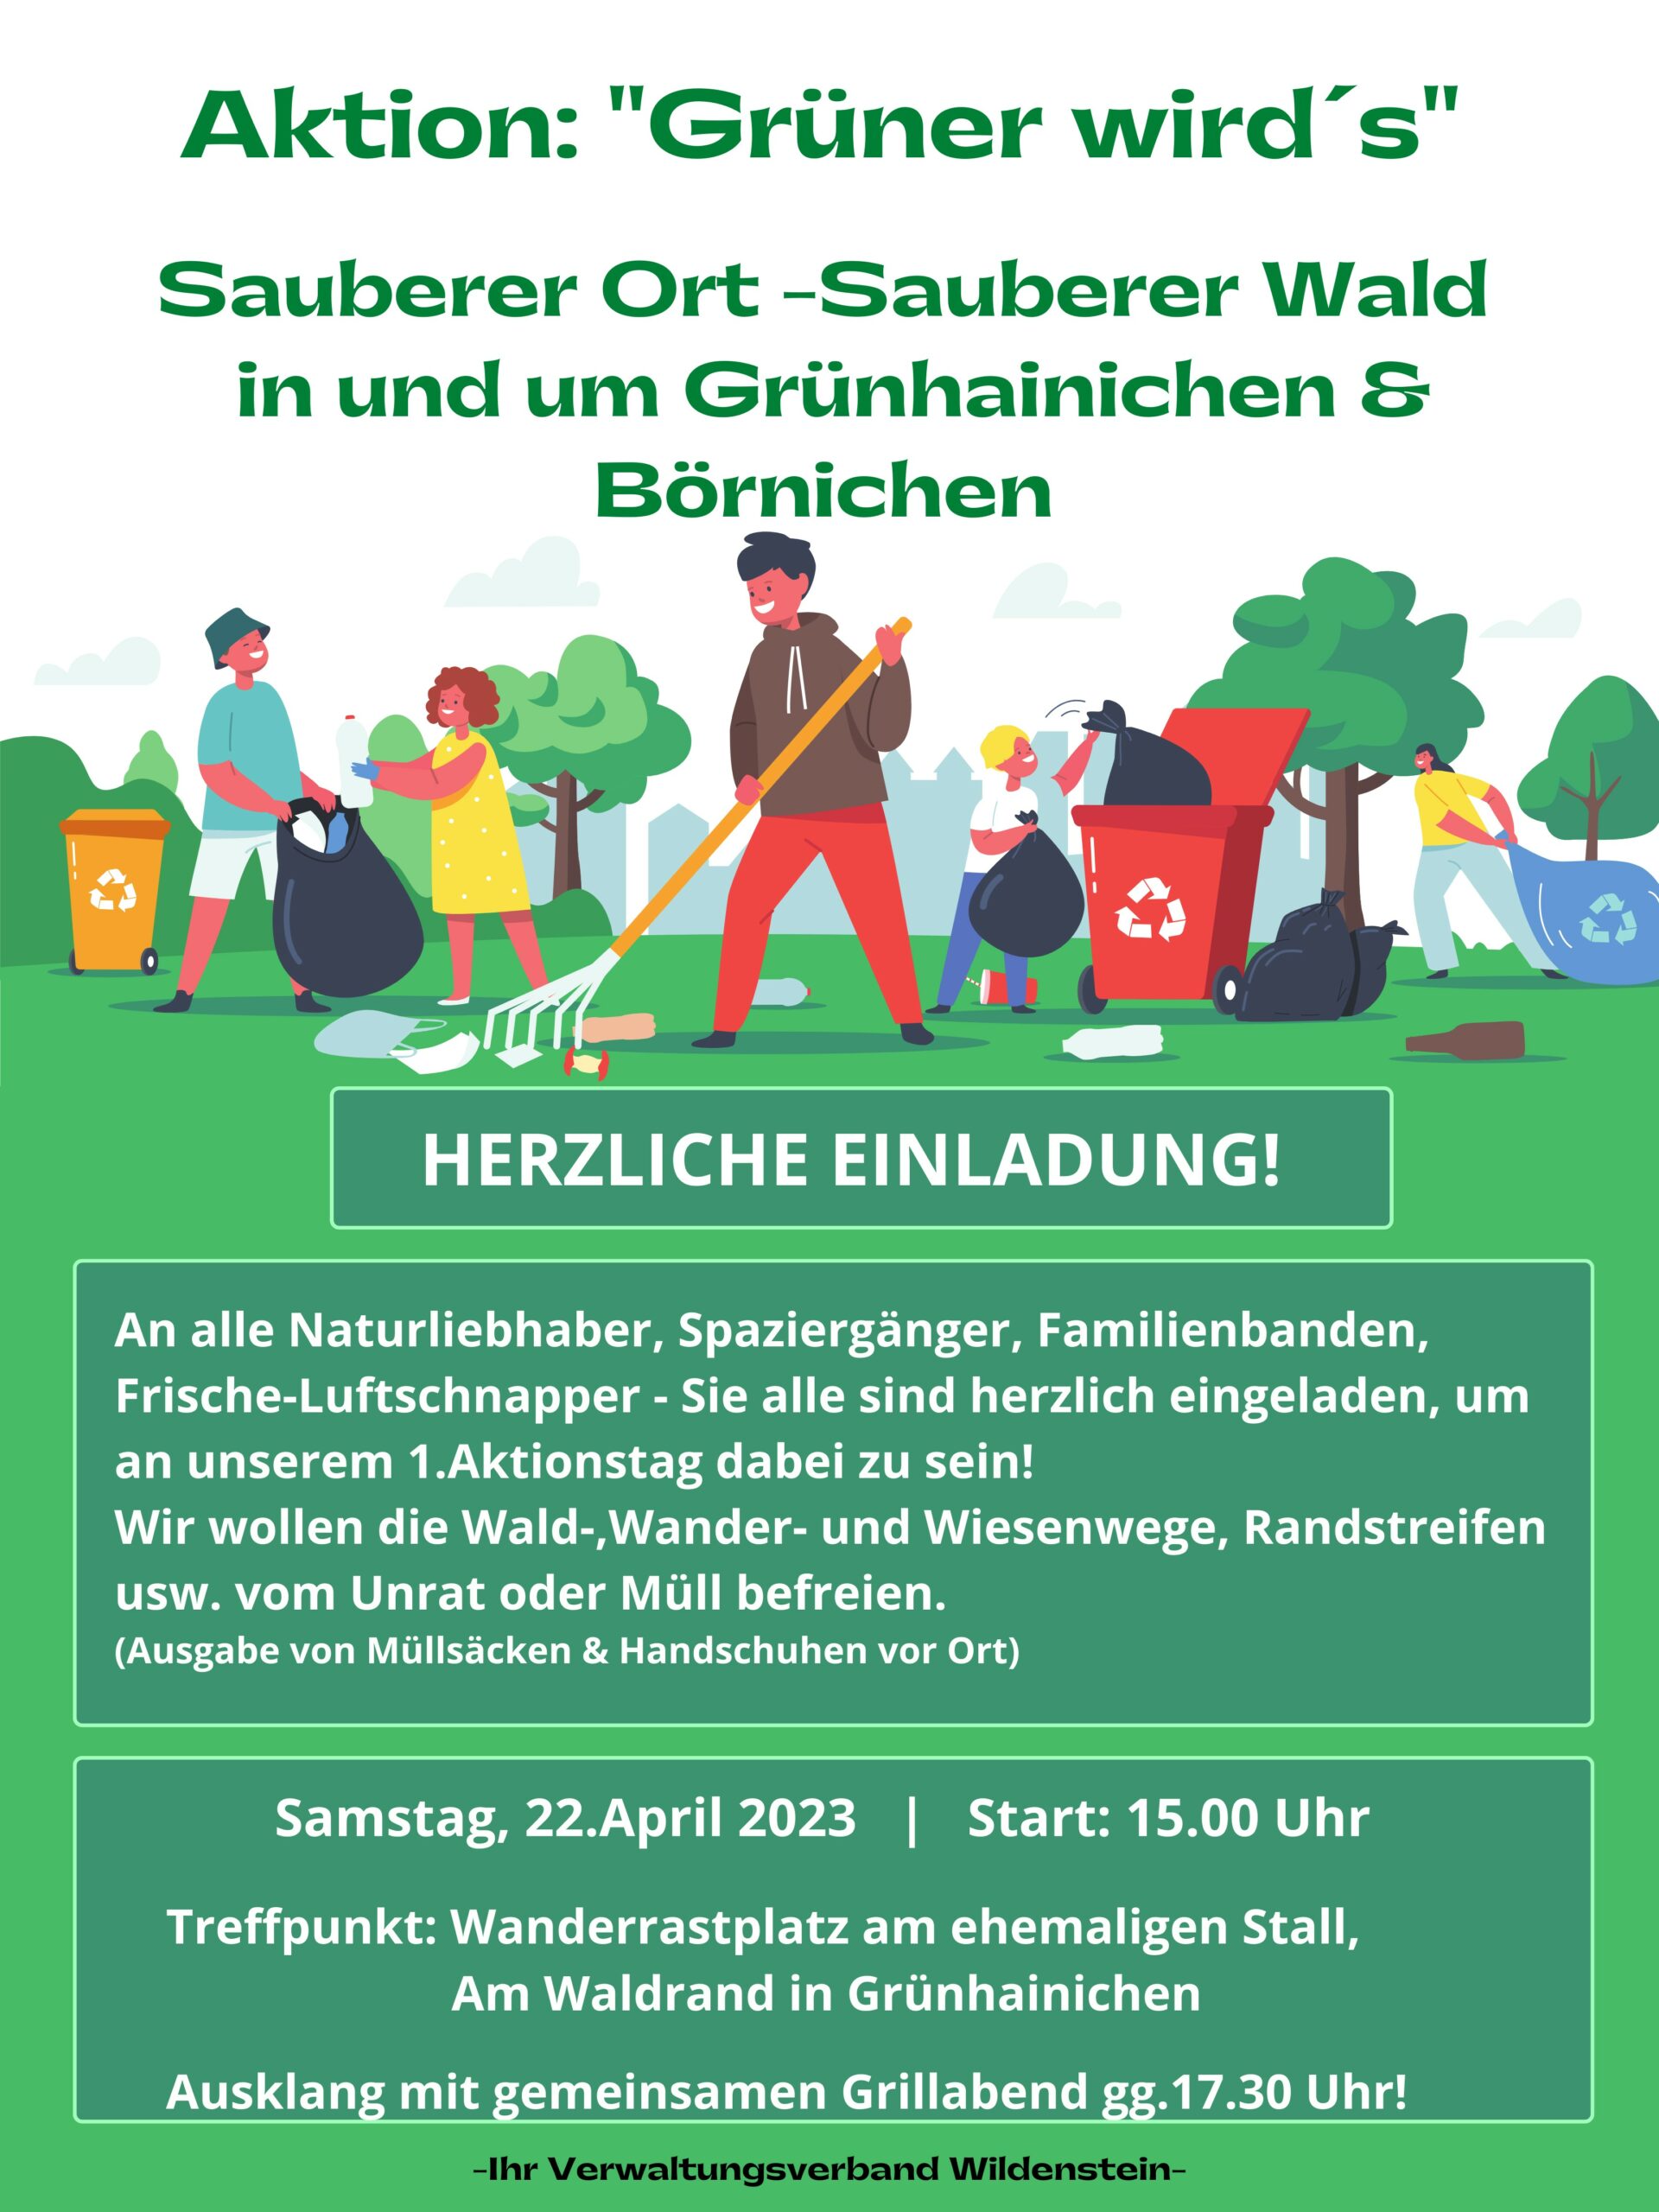 Aktionstag "Grüner wird´s" - sauberer Ort-sauberer Wald